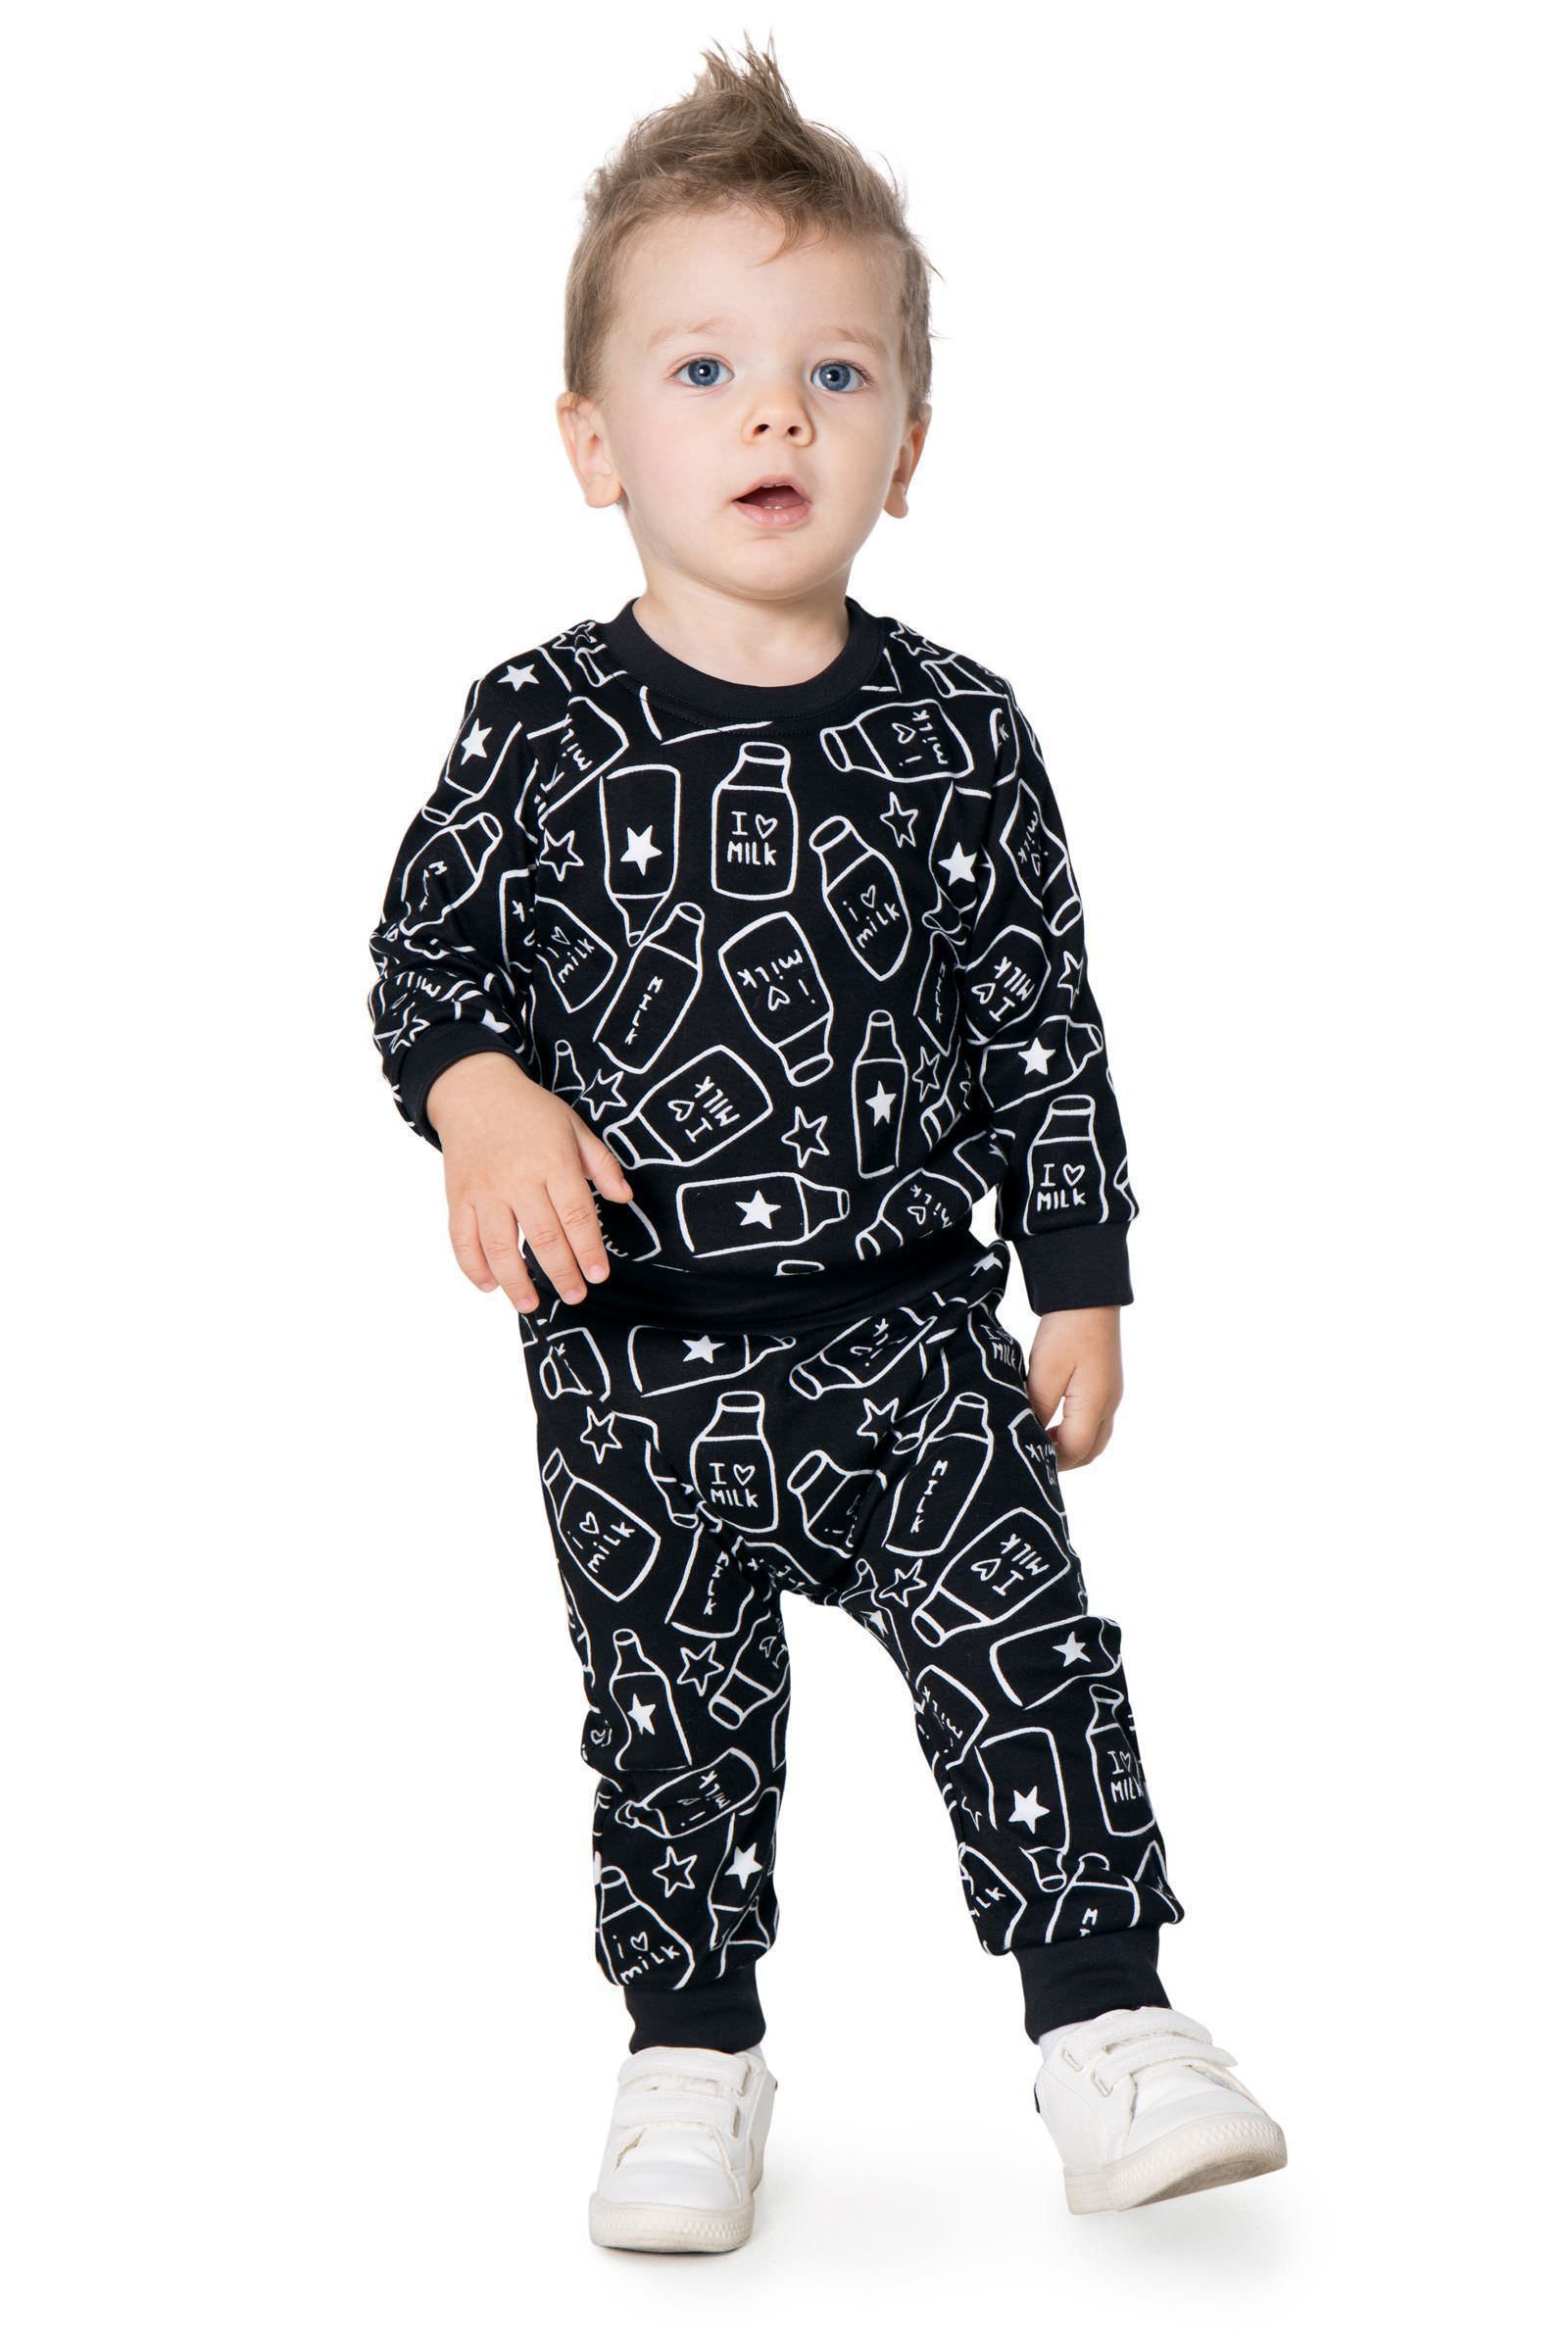 Комплект для мальчика АЛЕНА 3008 кофта брюки интерлок Текстиль Центр 